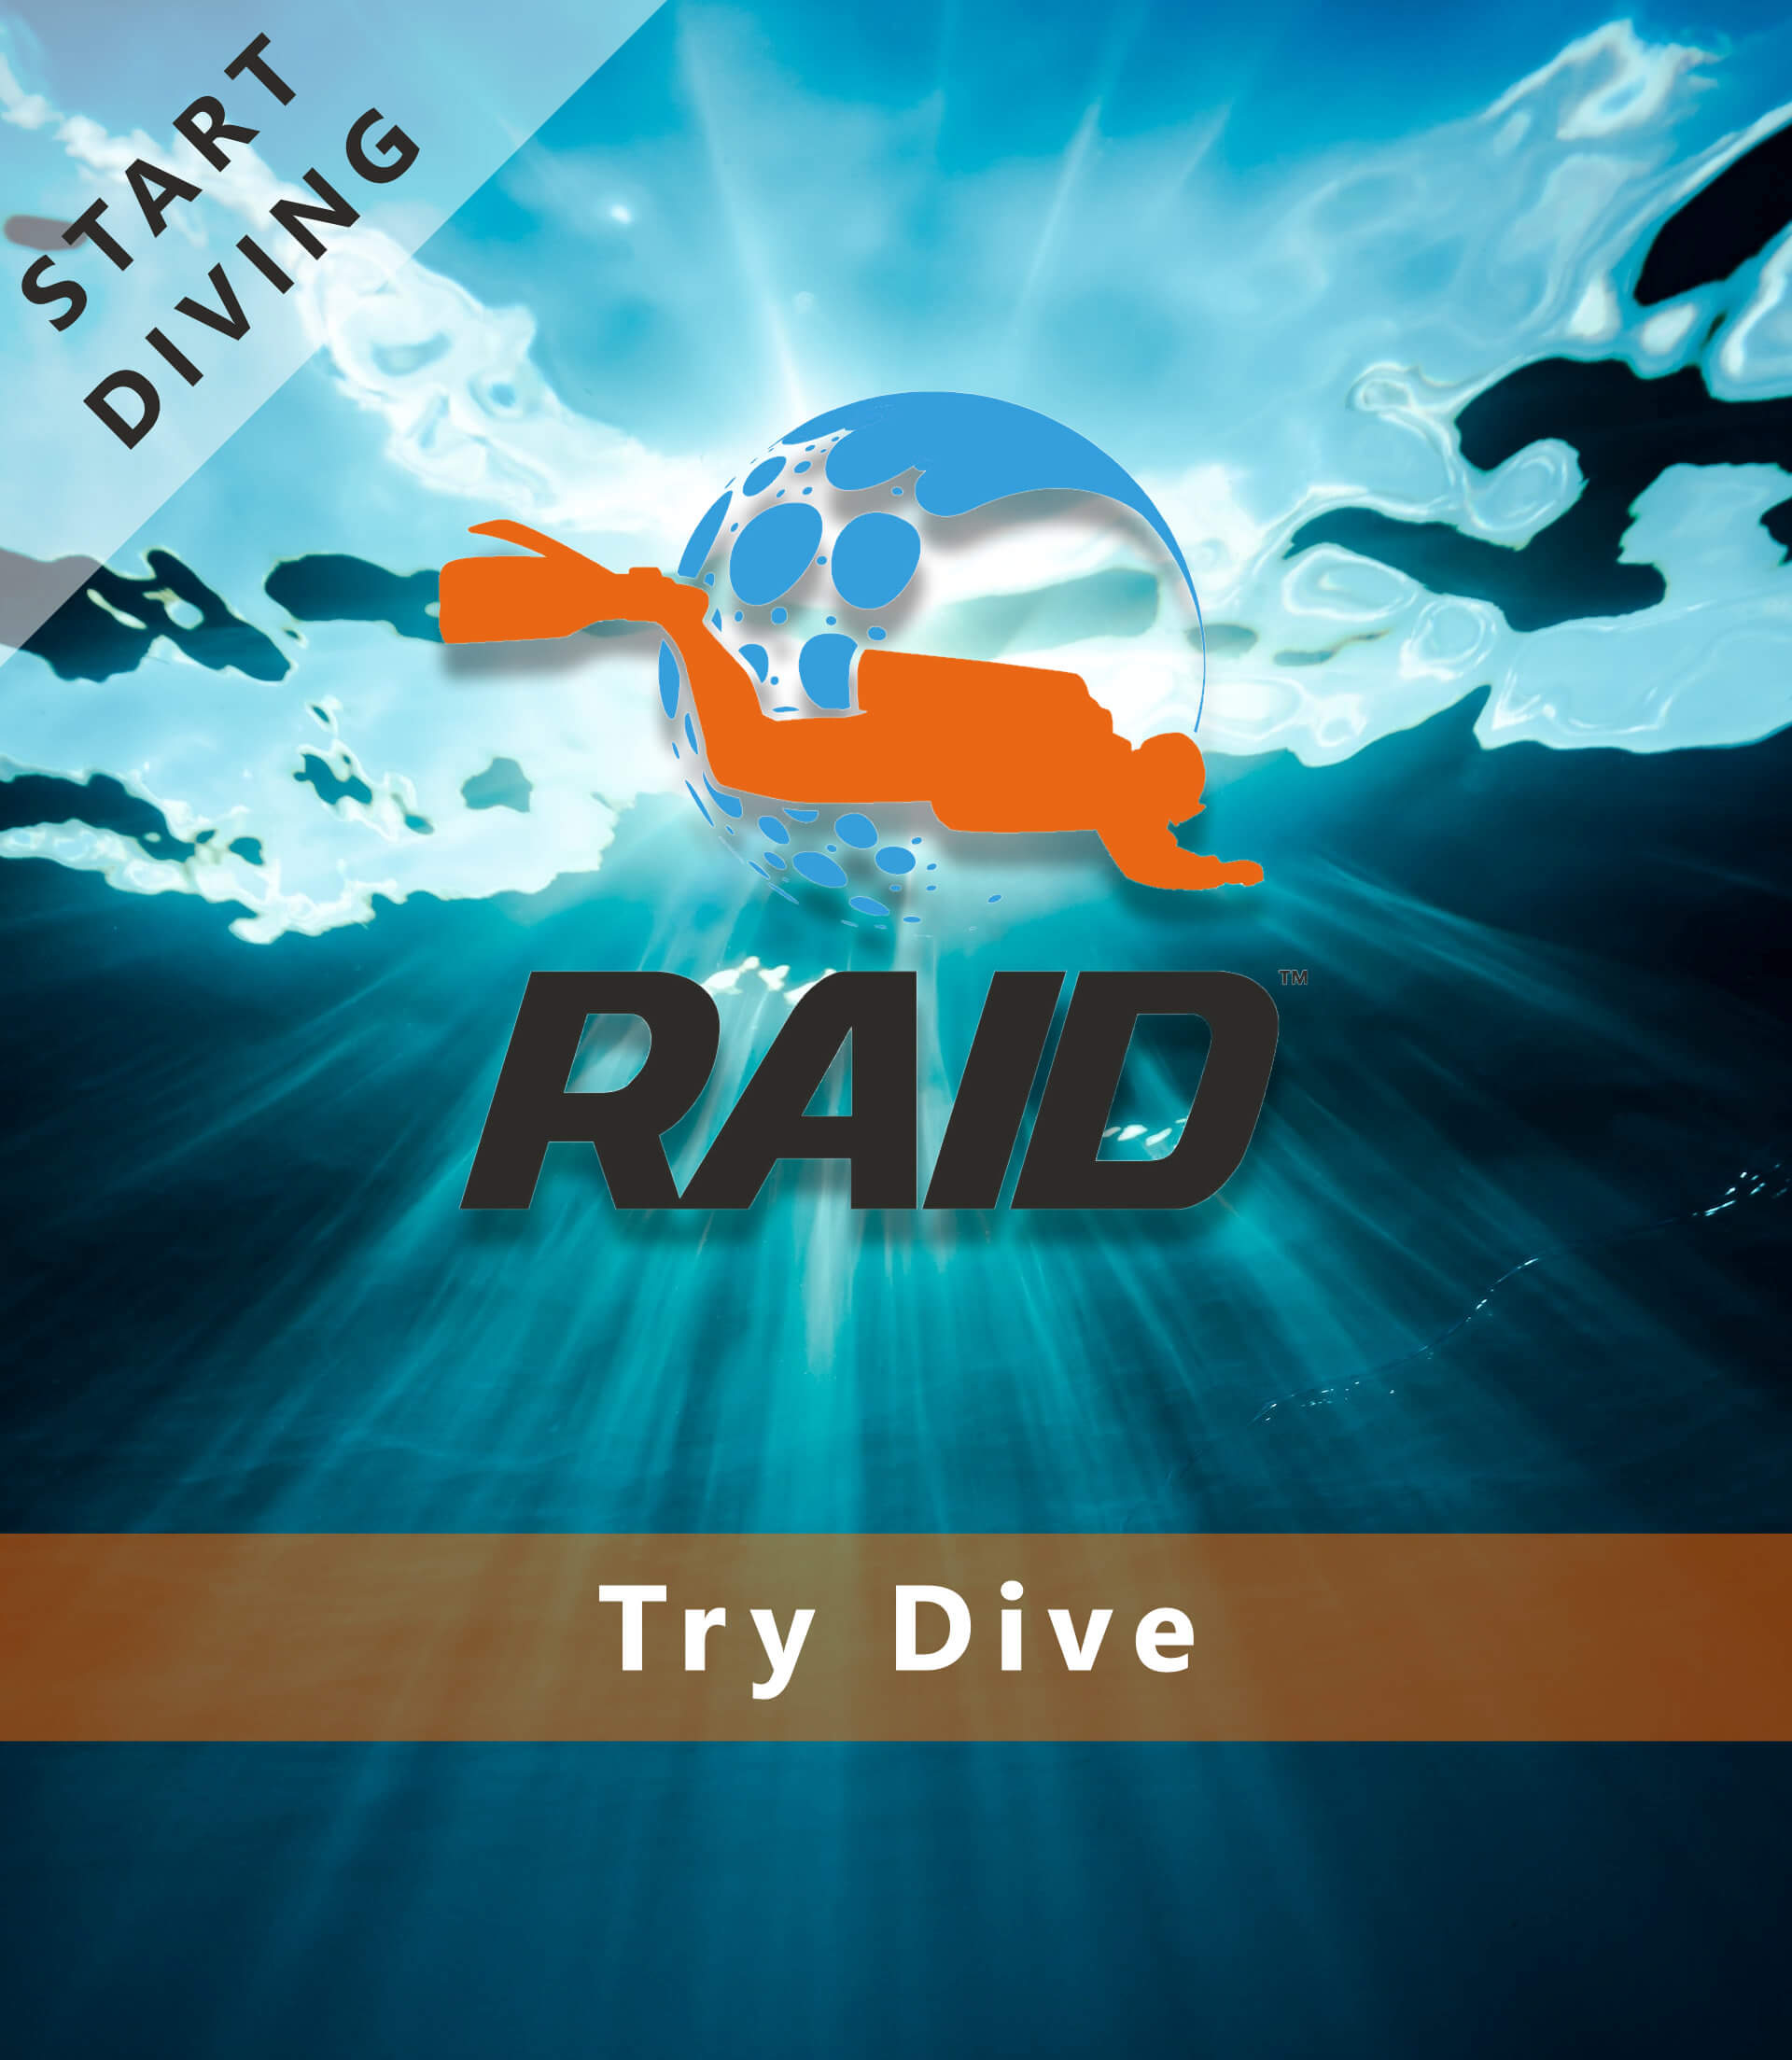 Start Diving / Try Dive - RAID International Scuba Diving Course